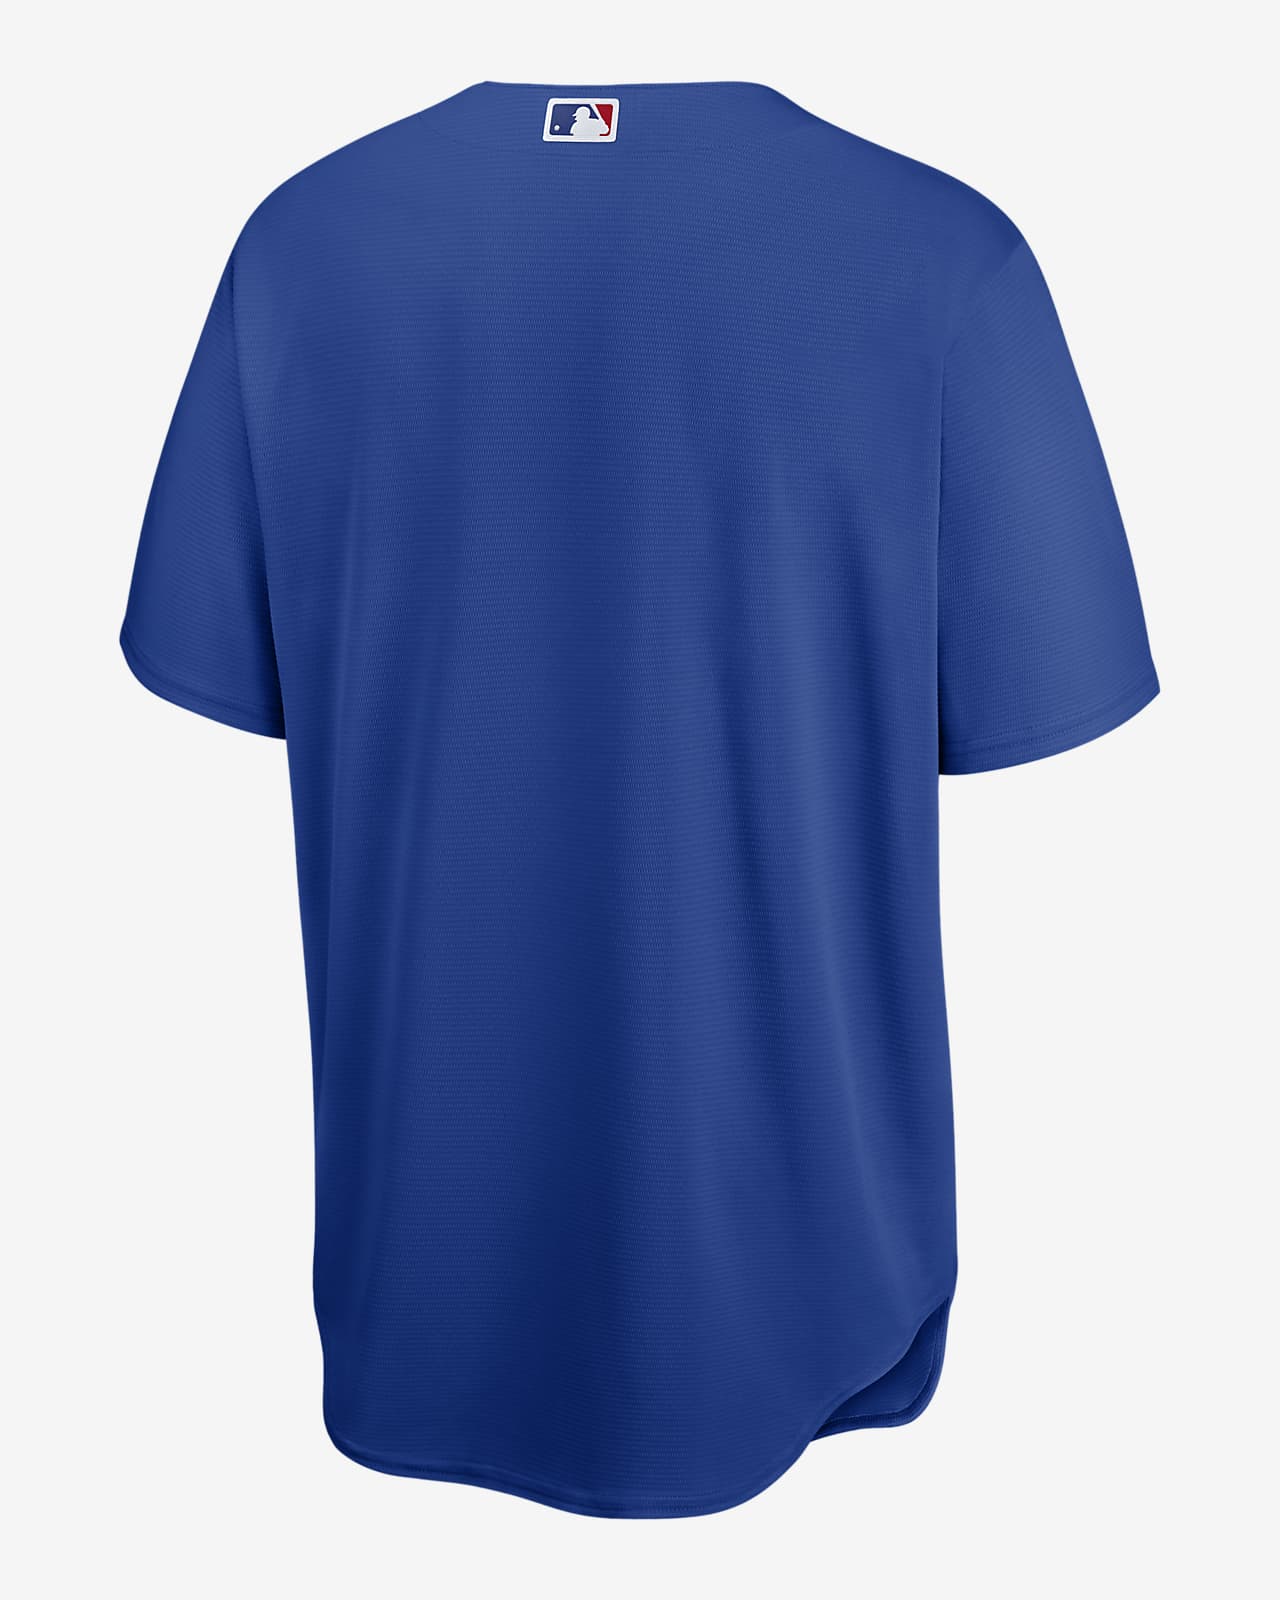 Camiseta de béisbol Replica para hombre MLB Chicago Cubs.